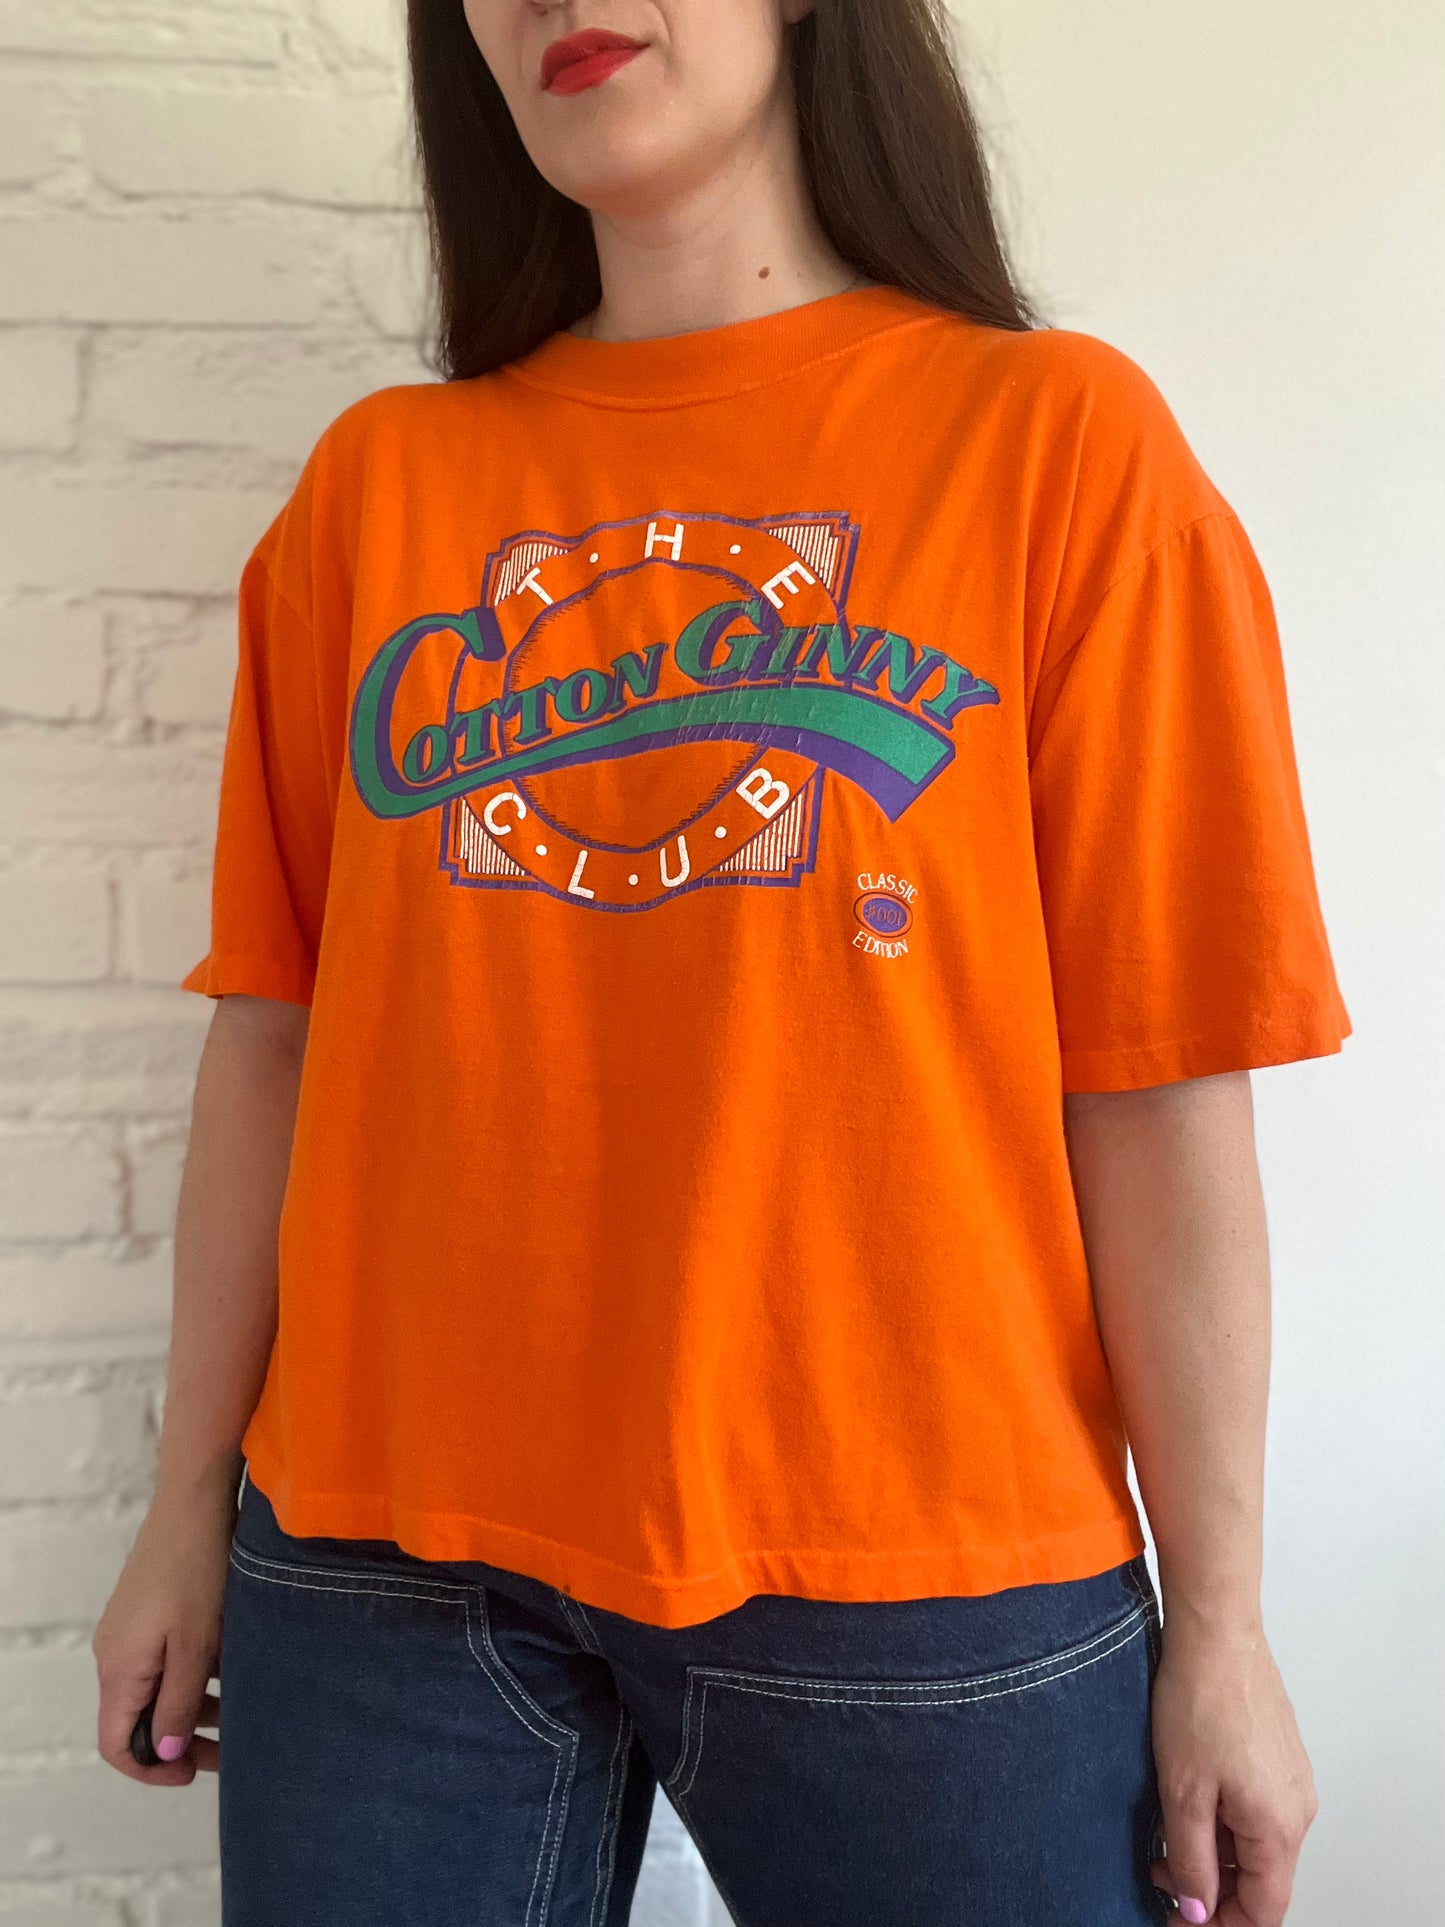 90s Cotton Ginny Orange T-Shirt - XL